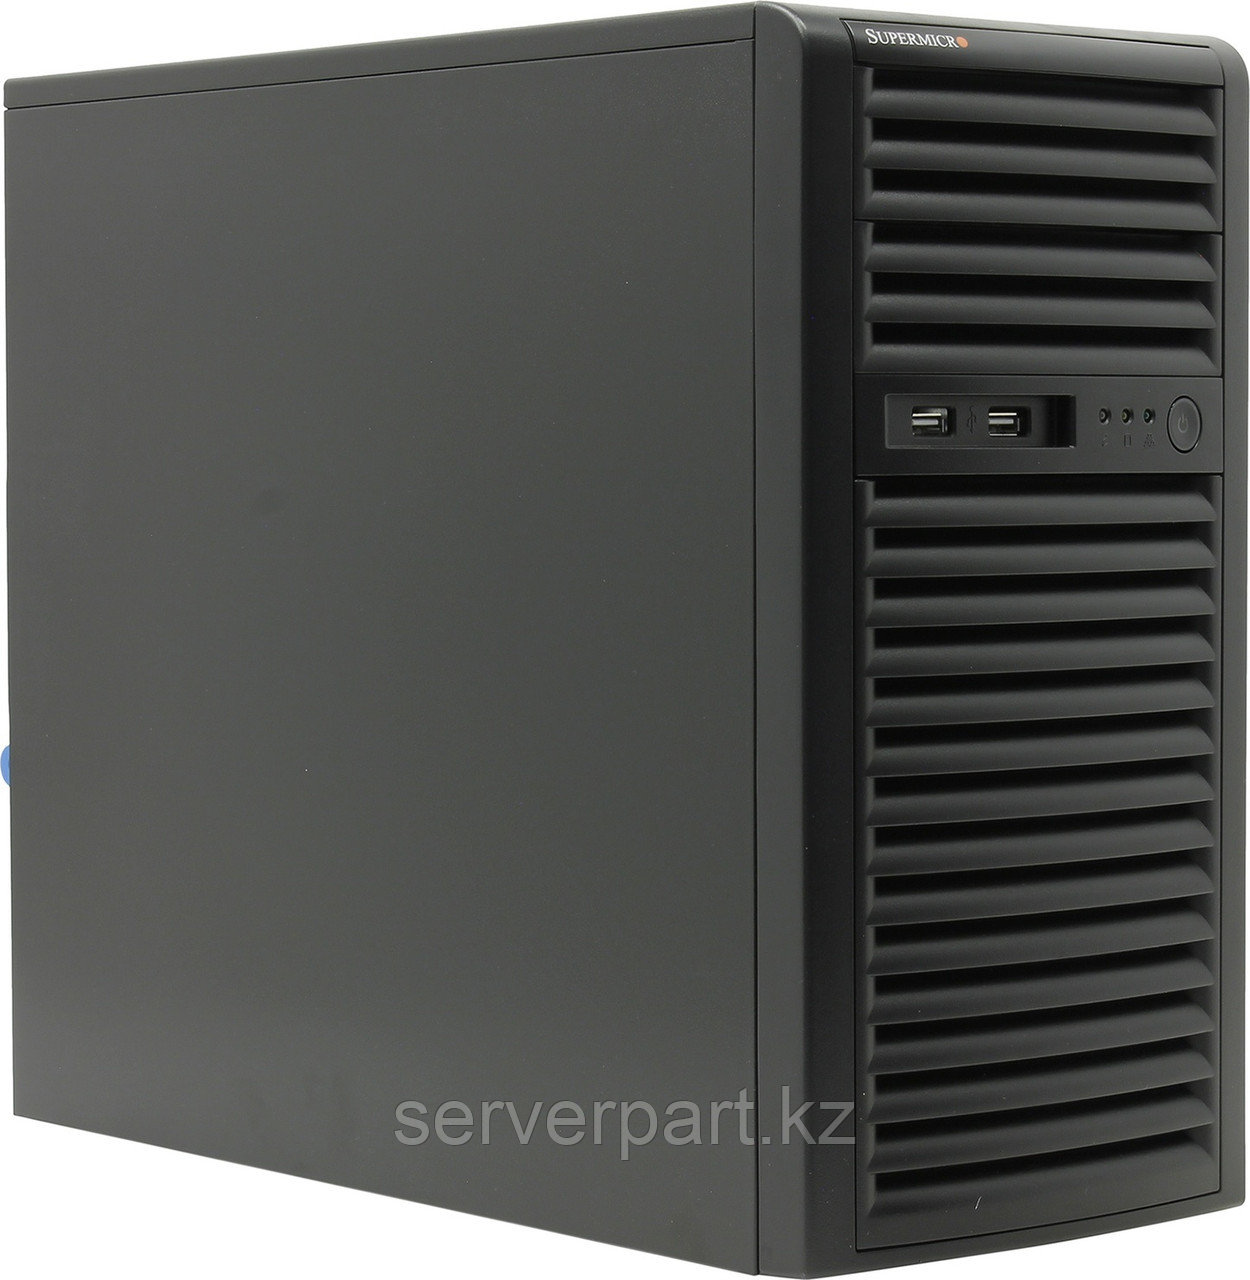 Сервер Supermicro 5039D Tower/4-core intel xeon E3-1220v6 3GHz/48GB UDIMM nECC/1x480GB SSD MU Hyb, фото 1